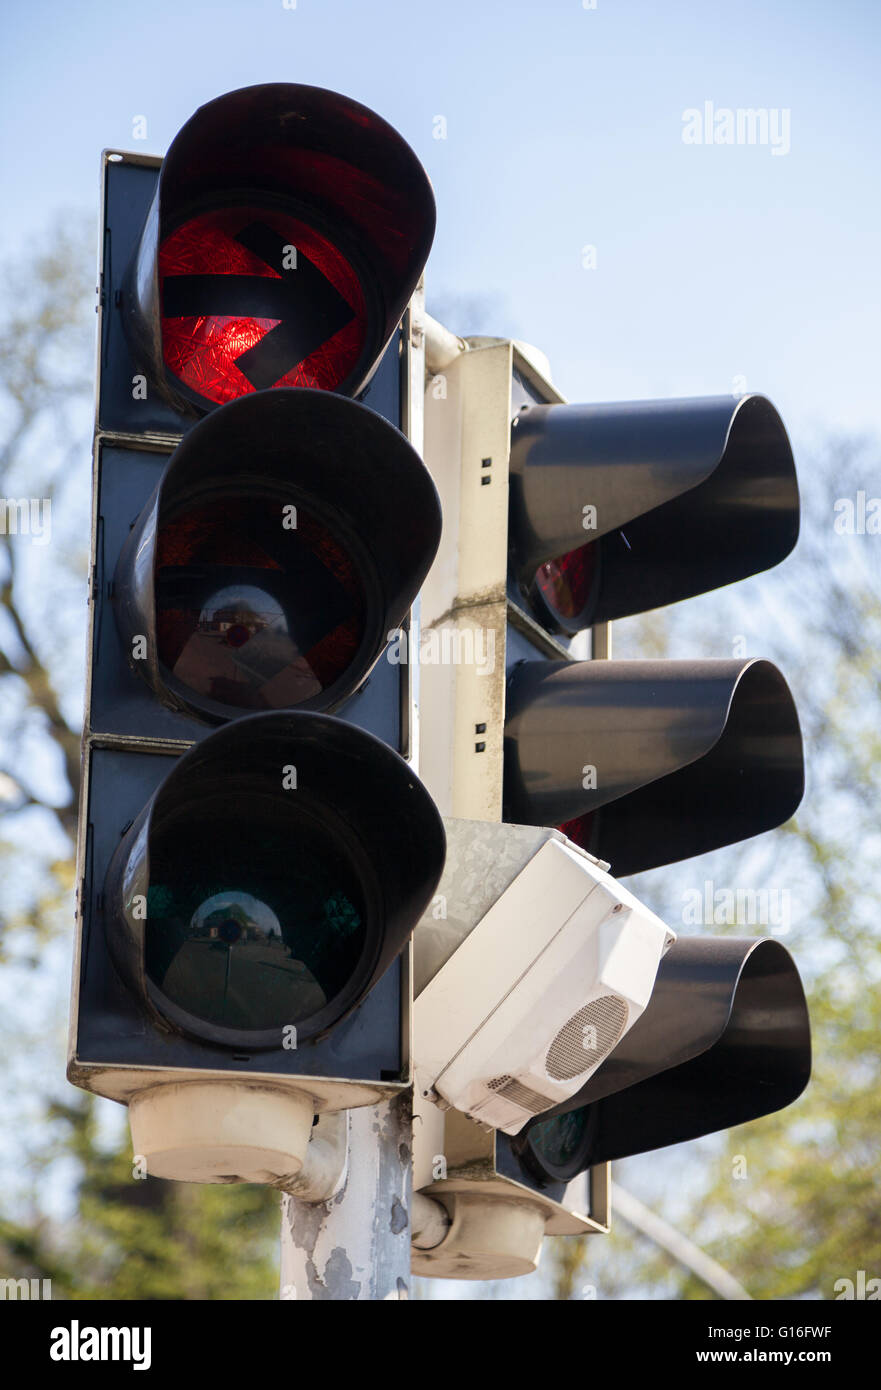 german traffic light on a crossing Stock Photo